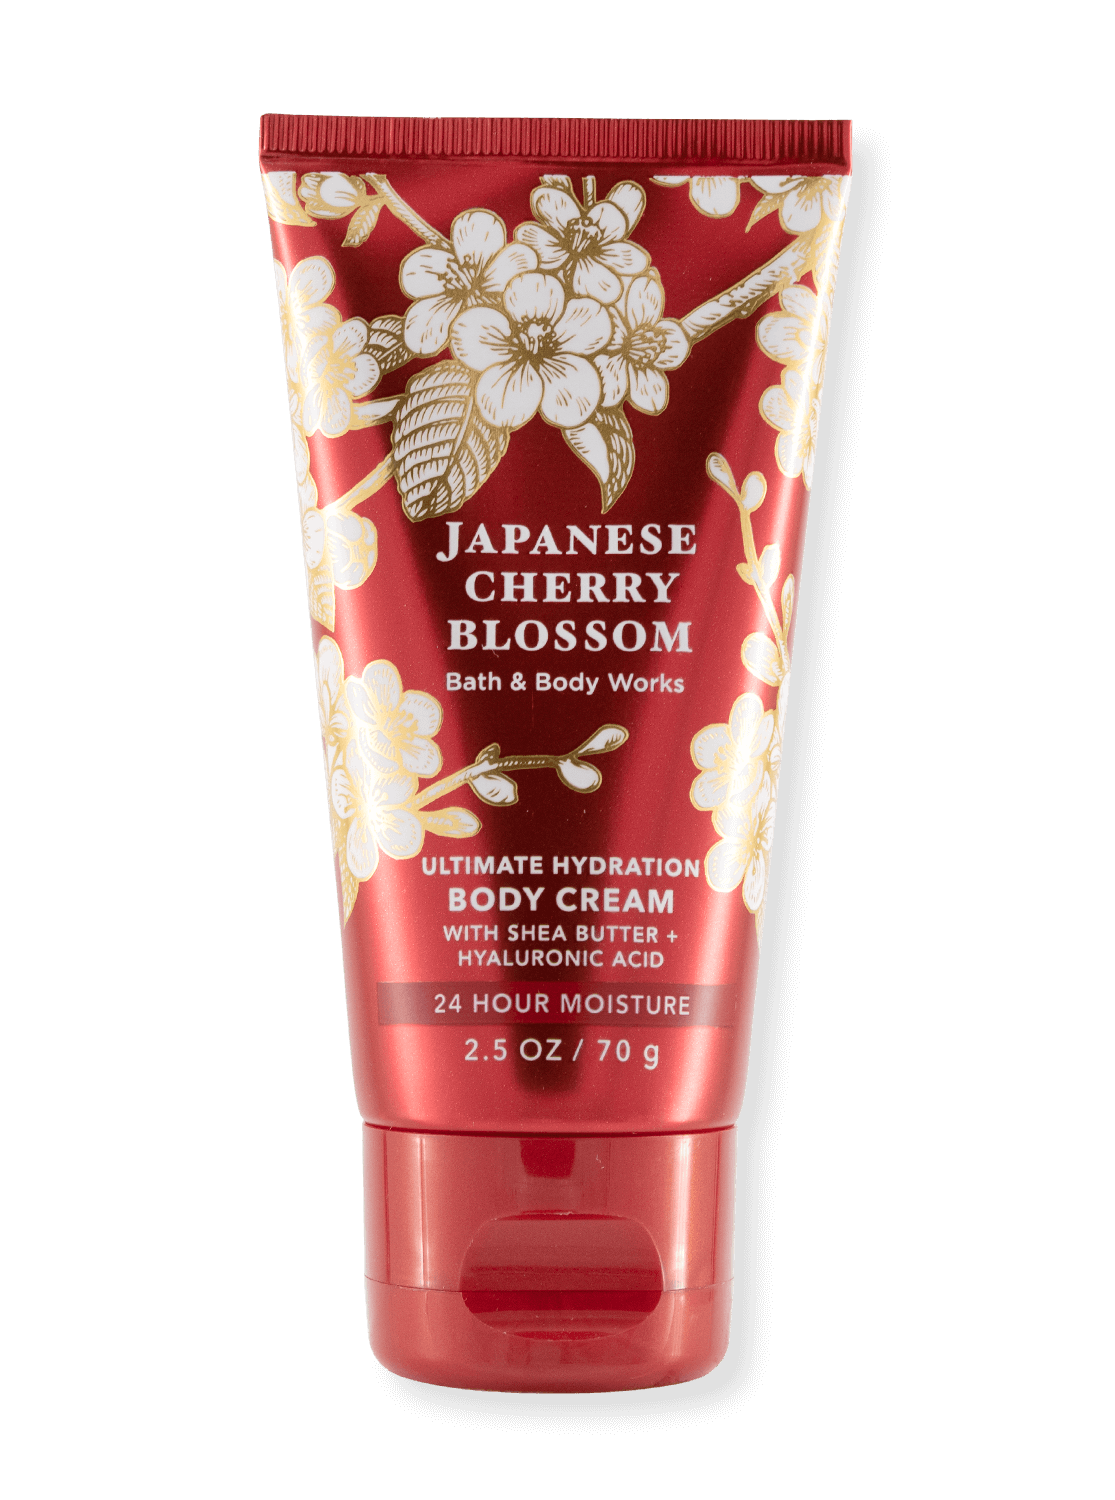 Body Cream - Japanese Cherry Blossom (Travel Size) - 70g